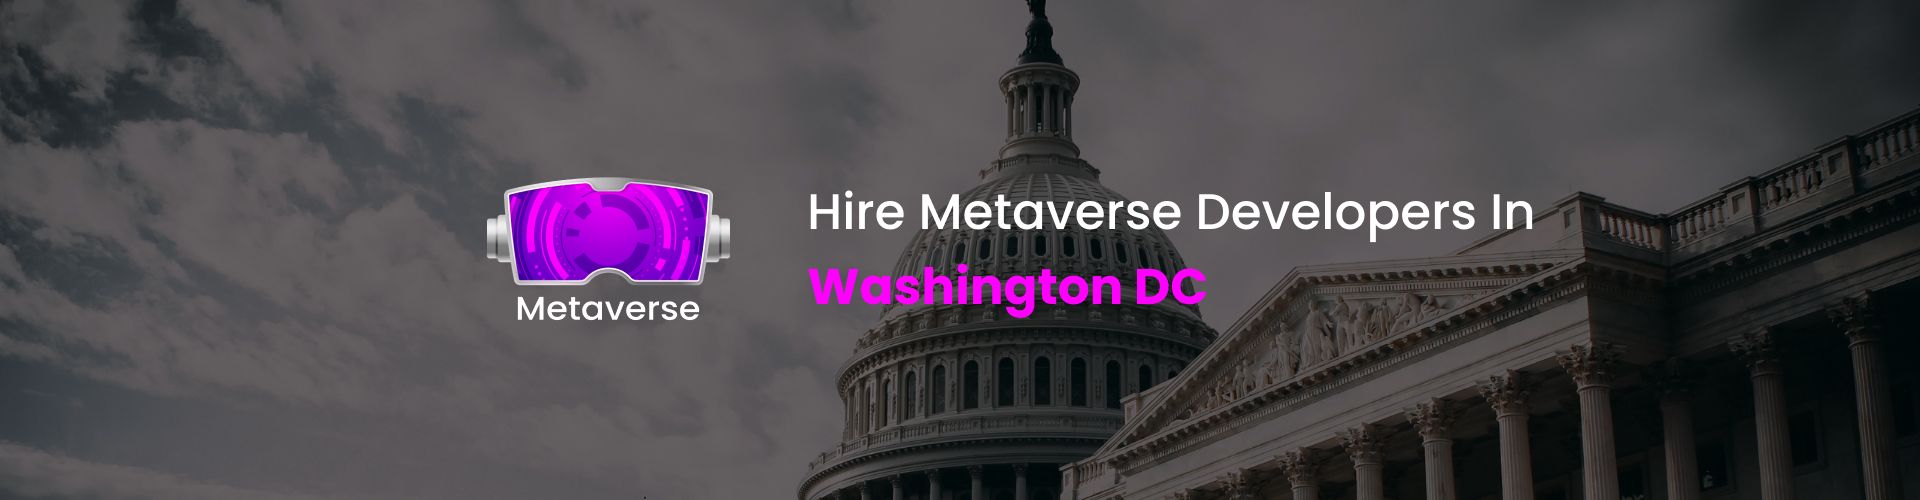 hire metaverse developers in washington dc